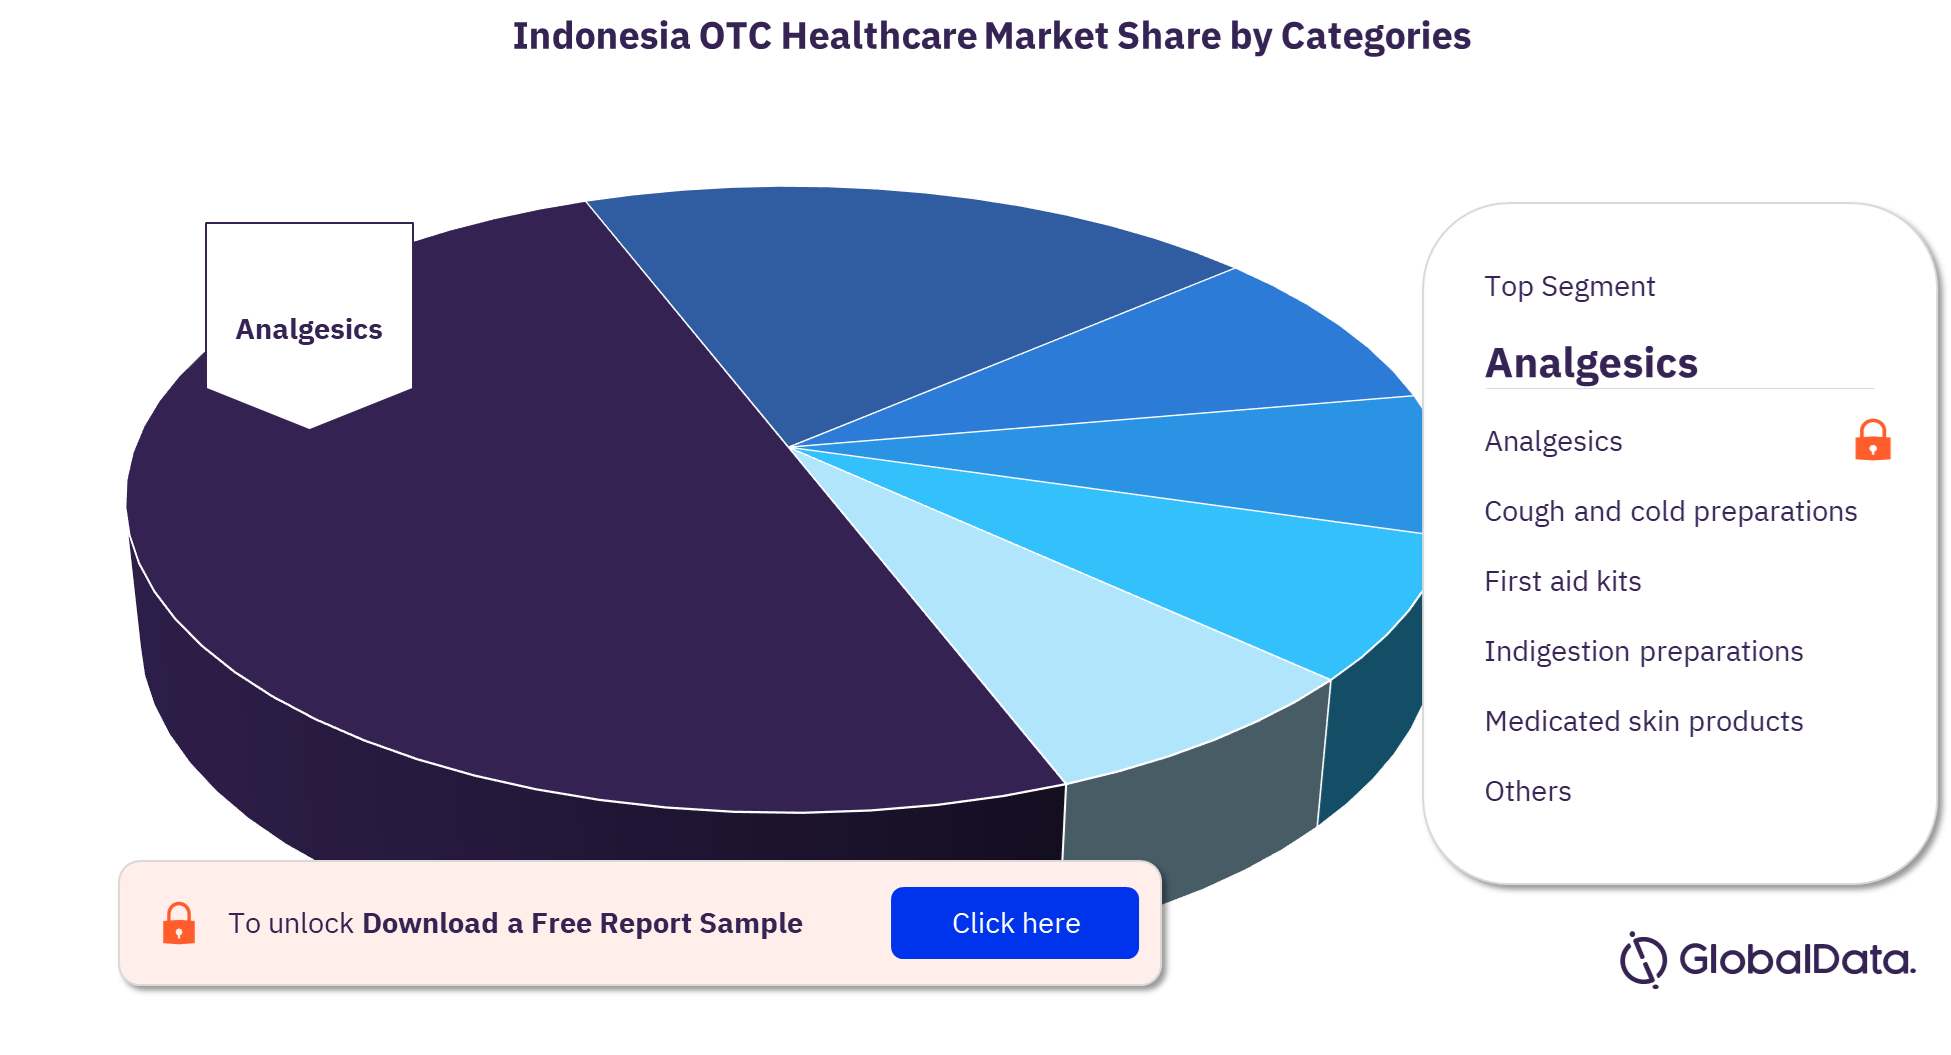 Indonesia OTC healthcare market, by key categories